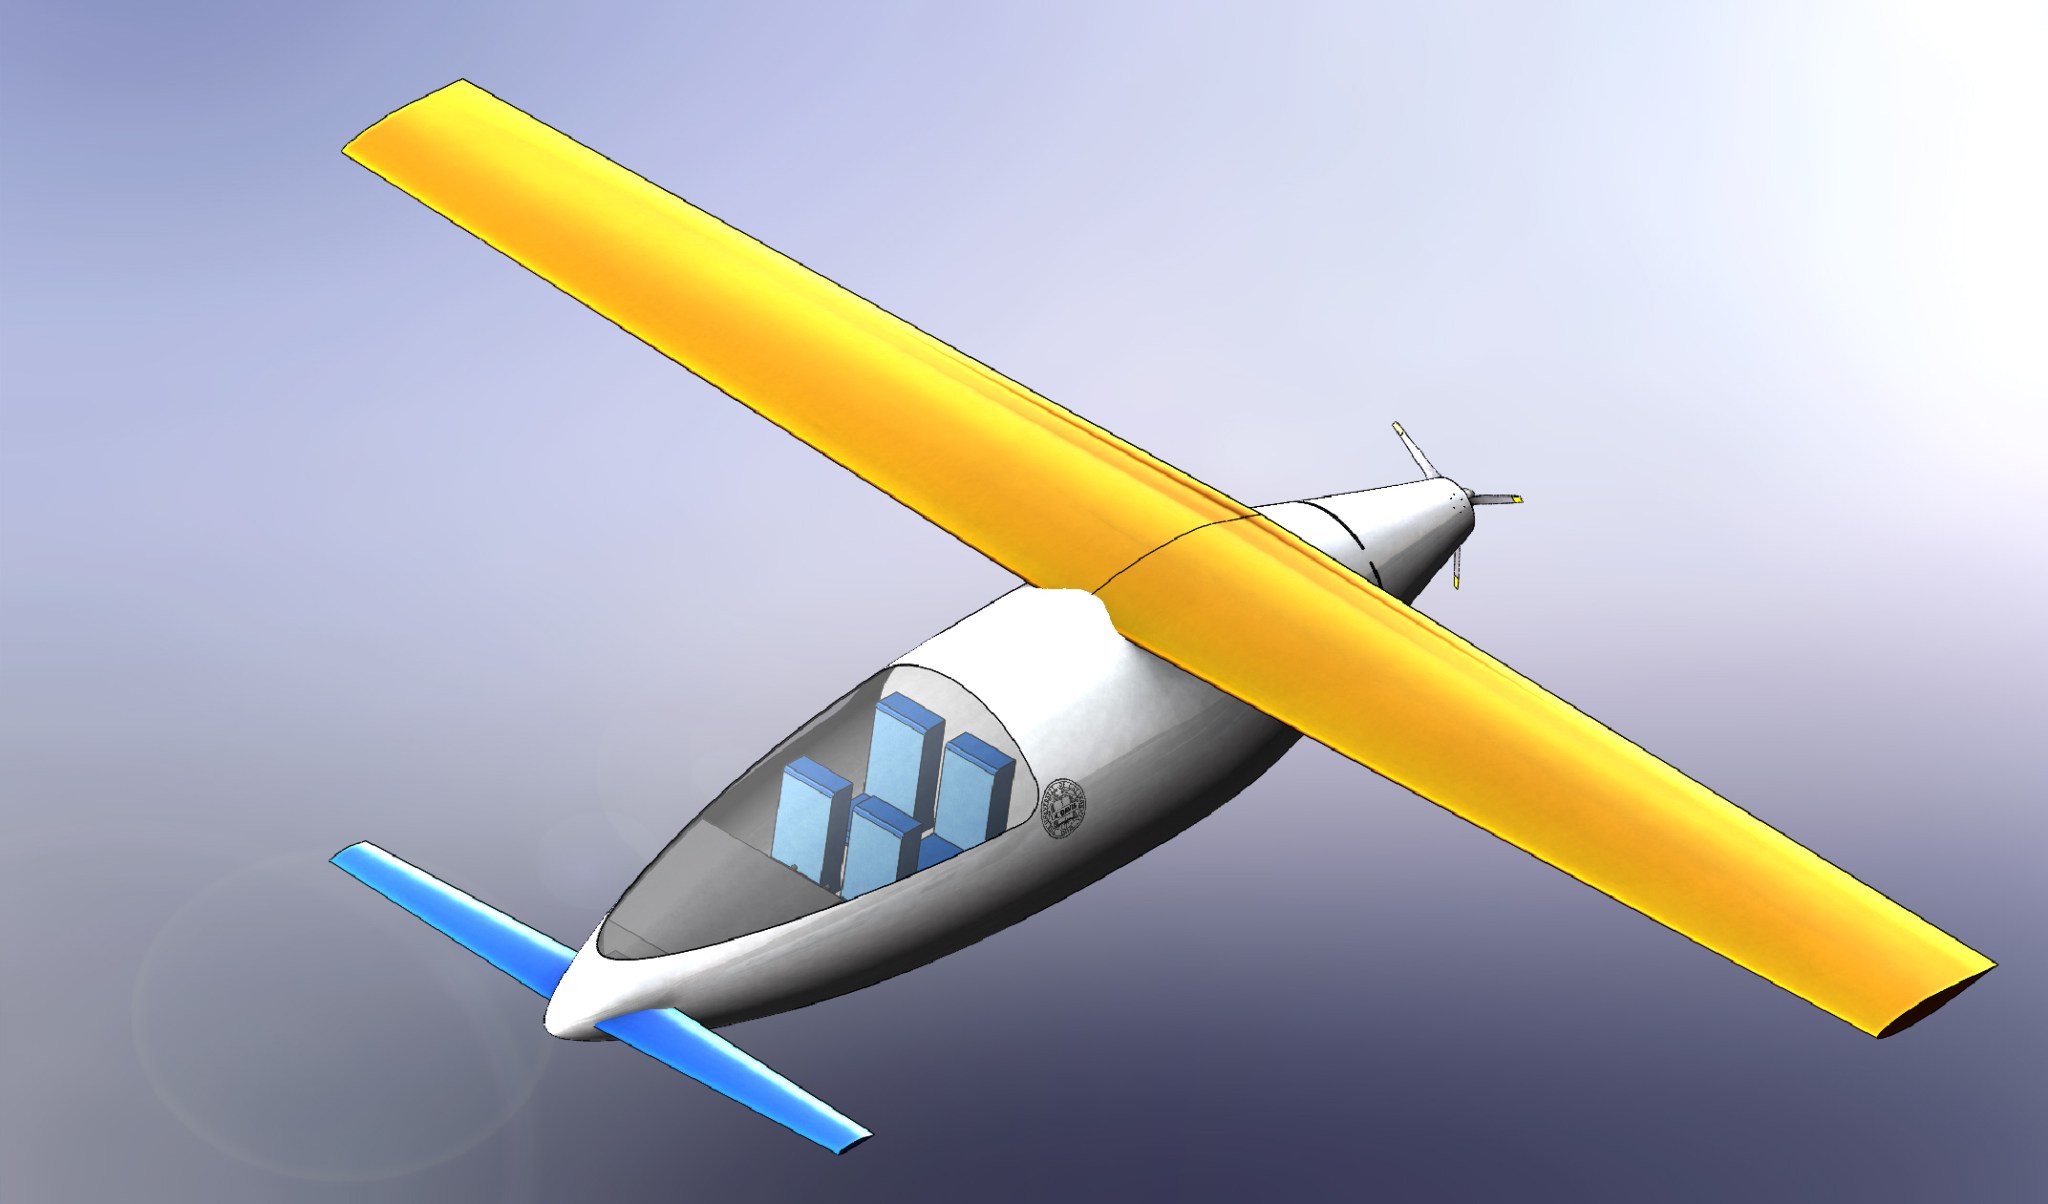 Artist concept of the Areion future aircraft design.